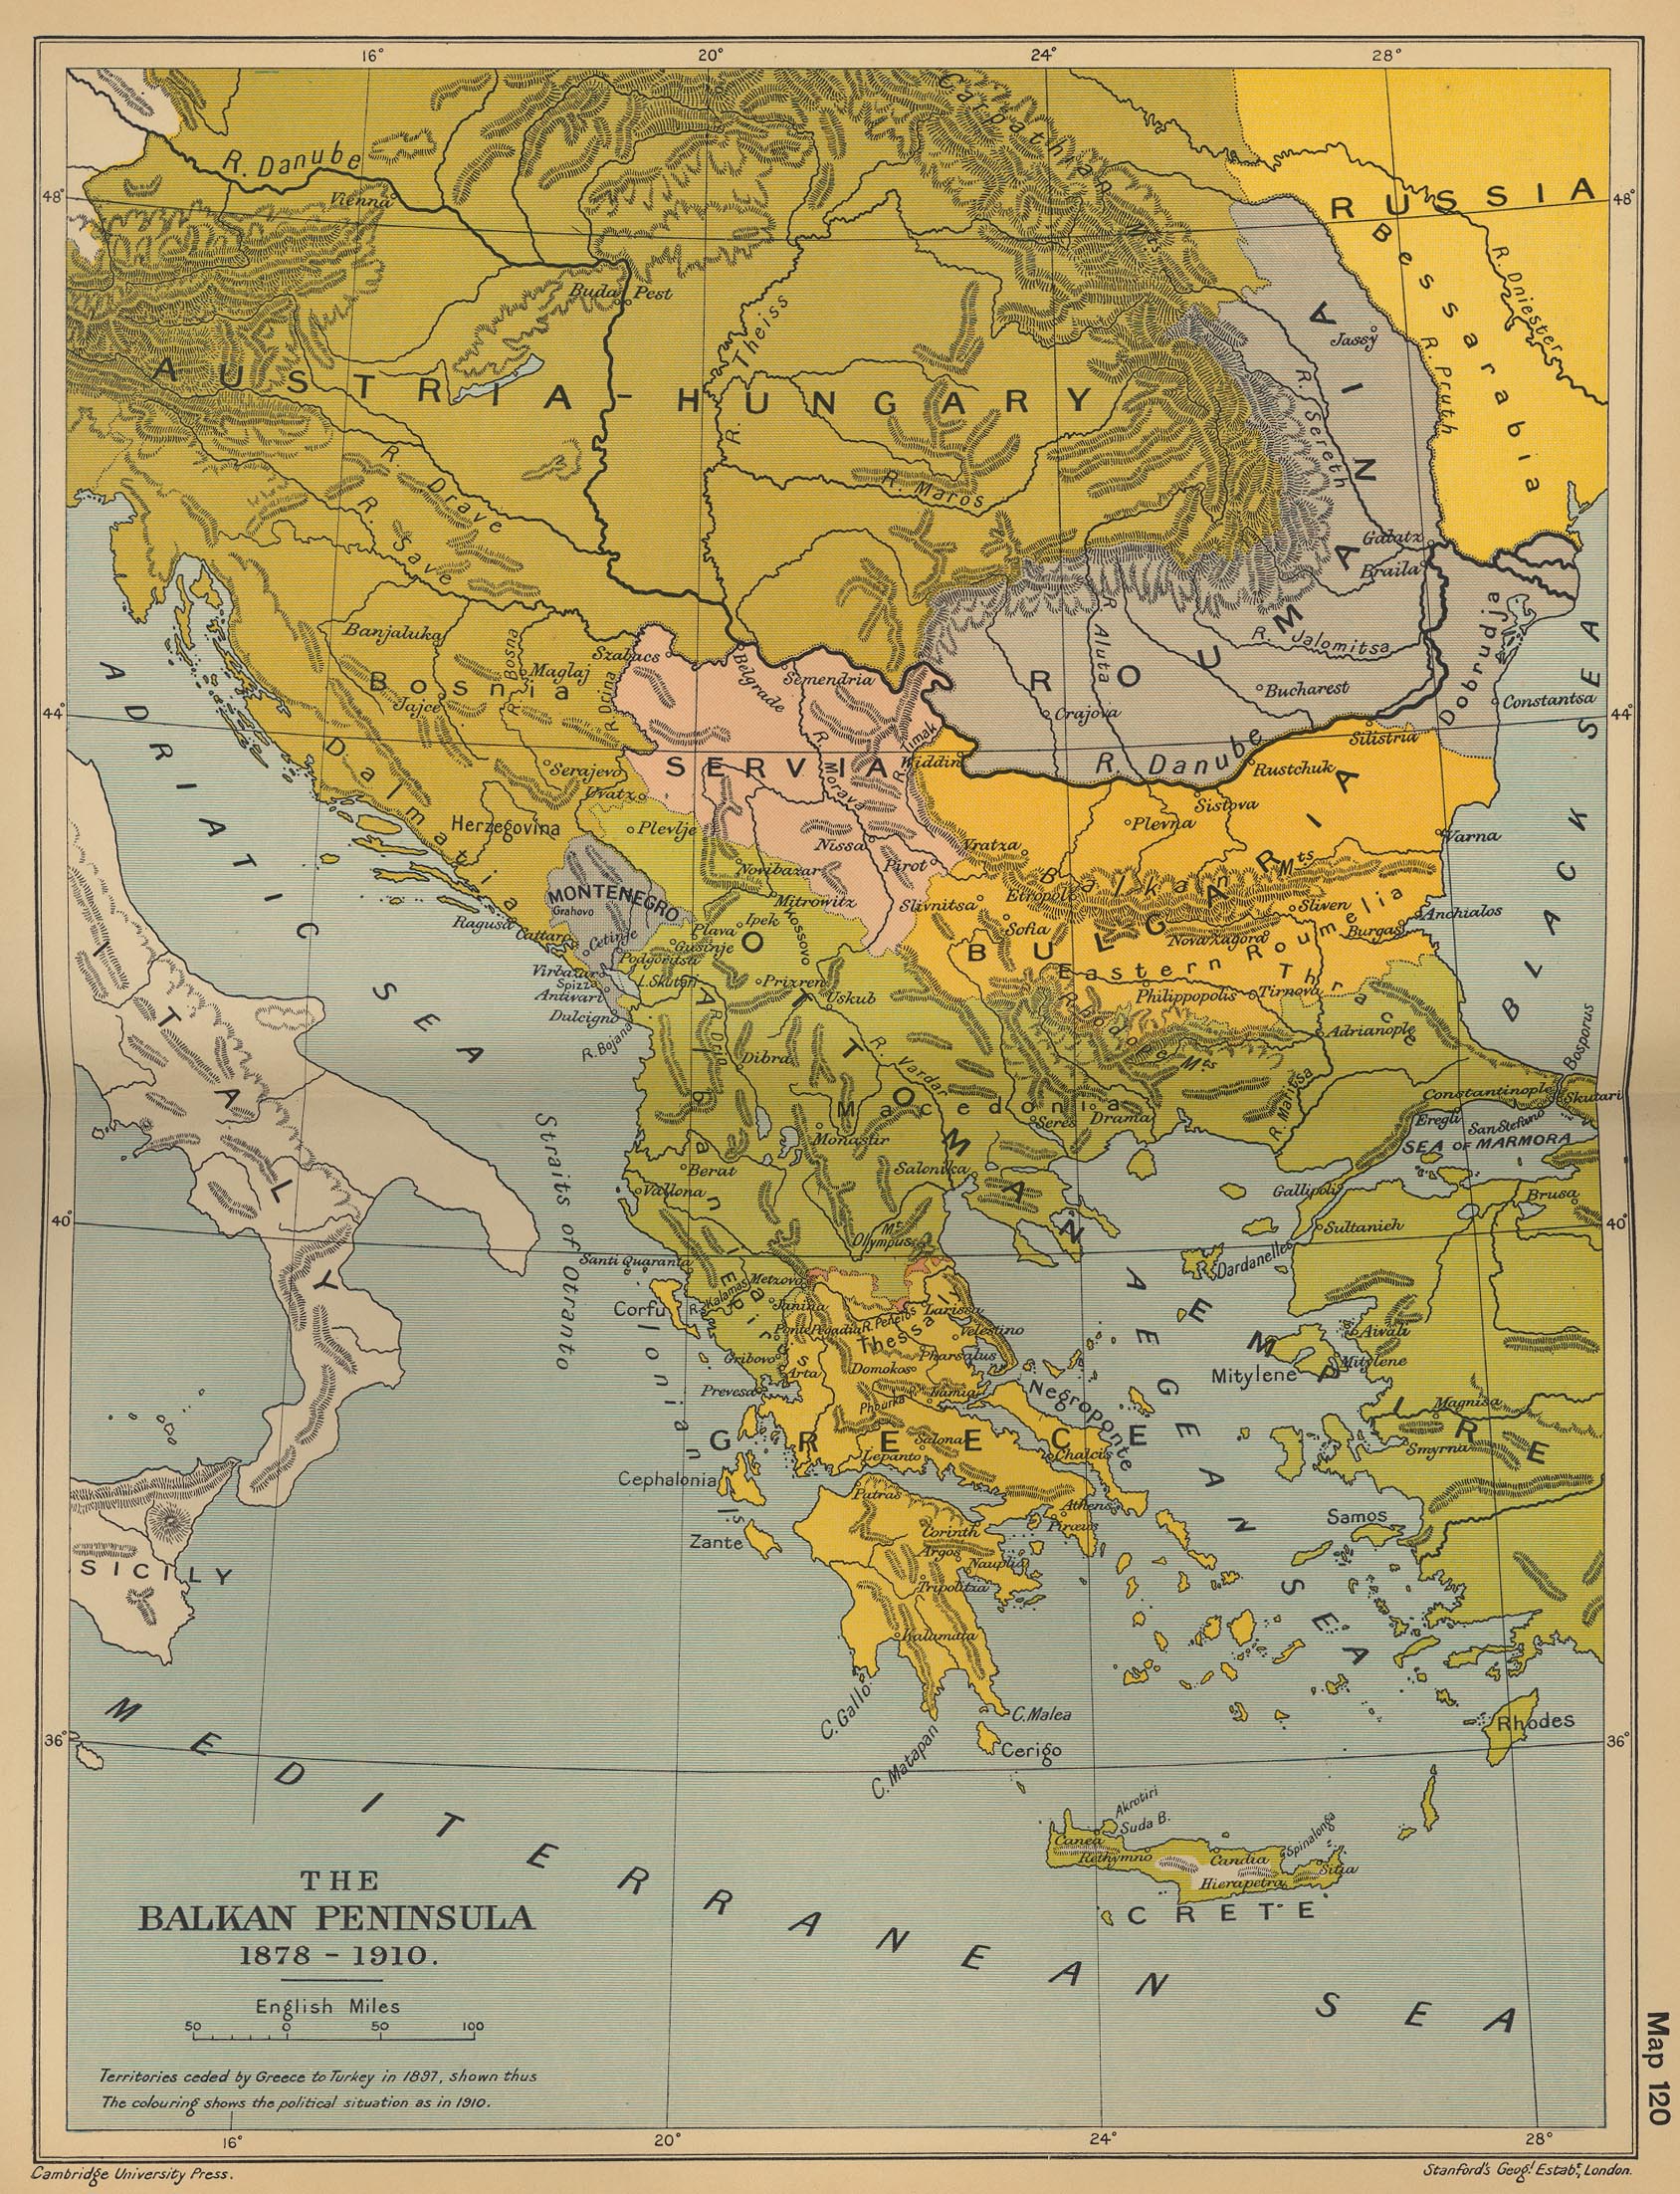 Map of the Balkan Peninsula 1878-1910